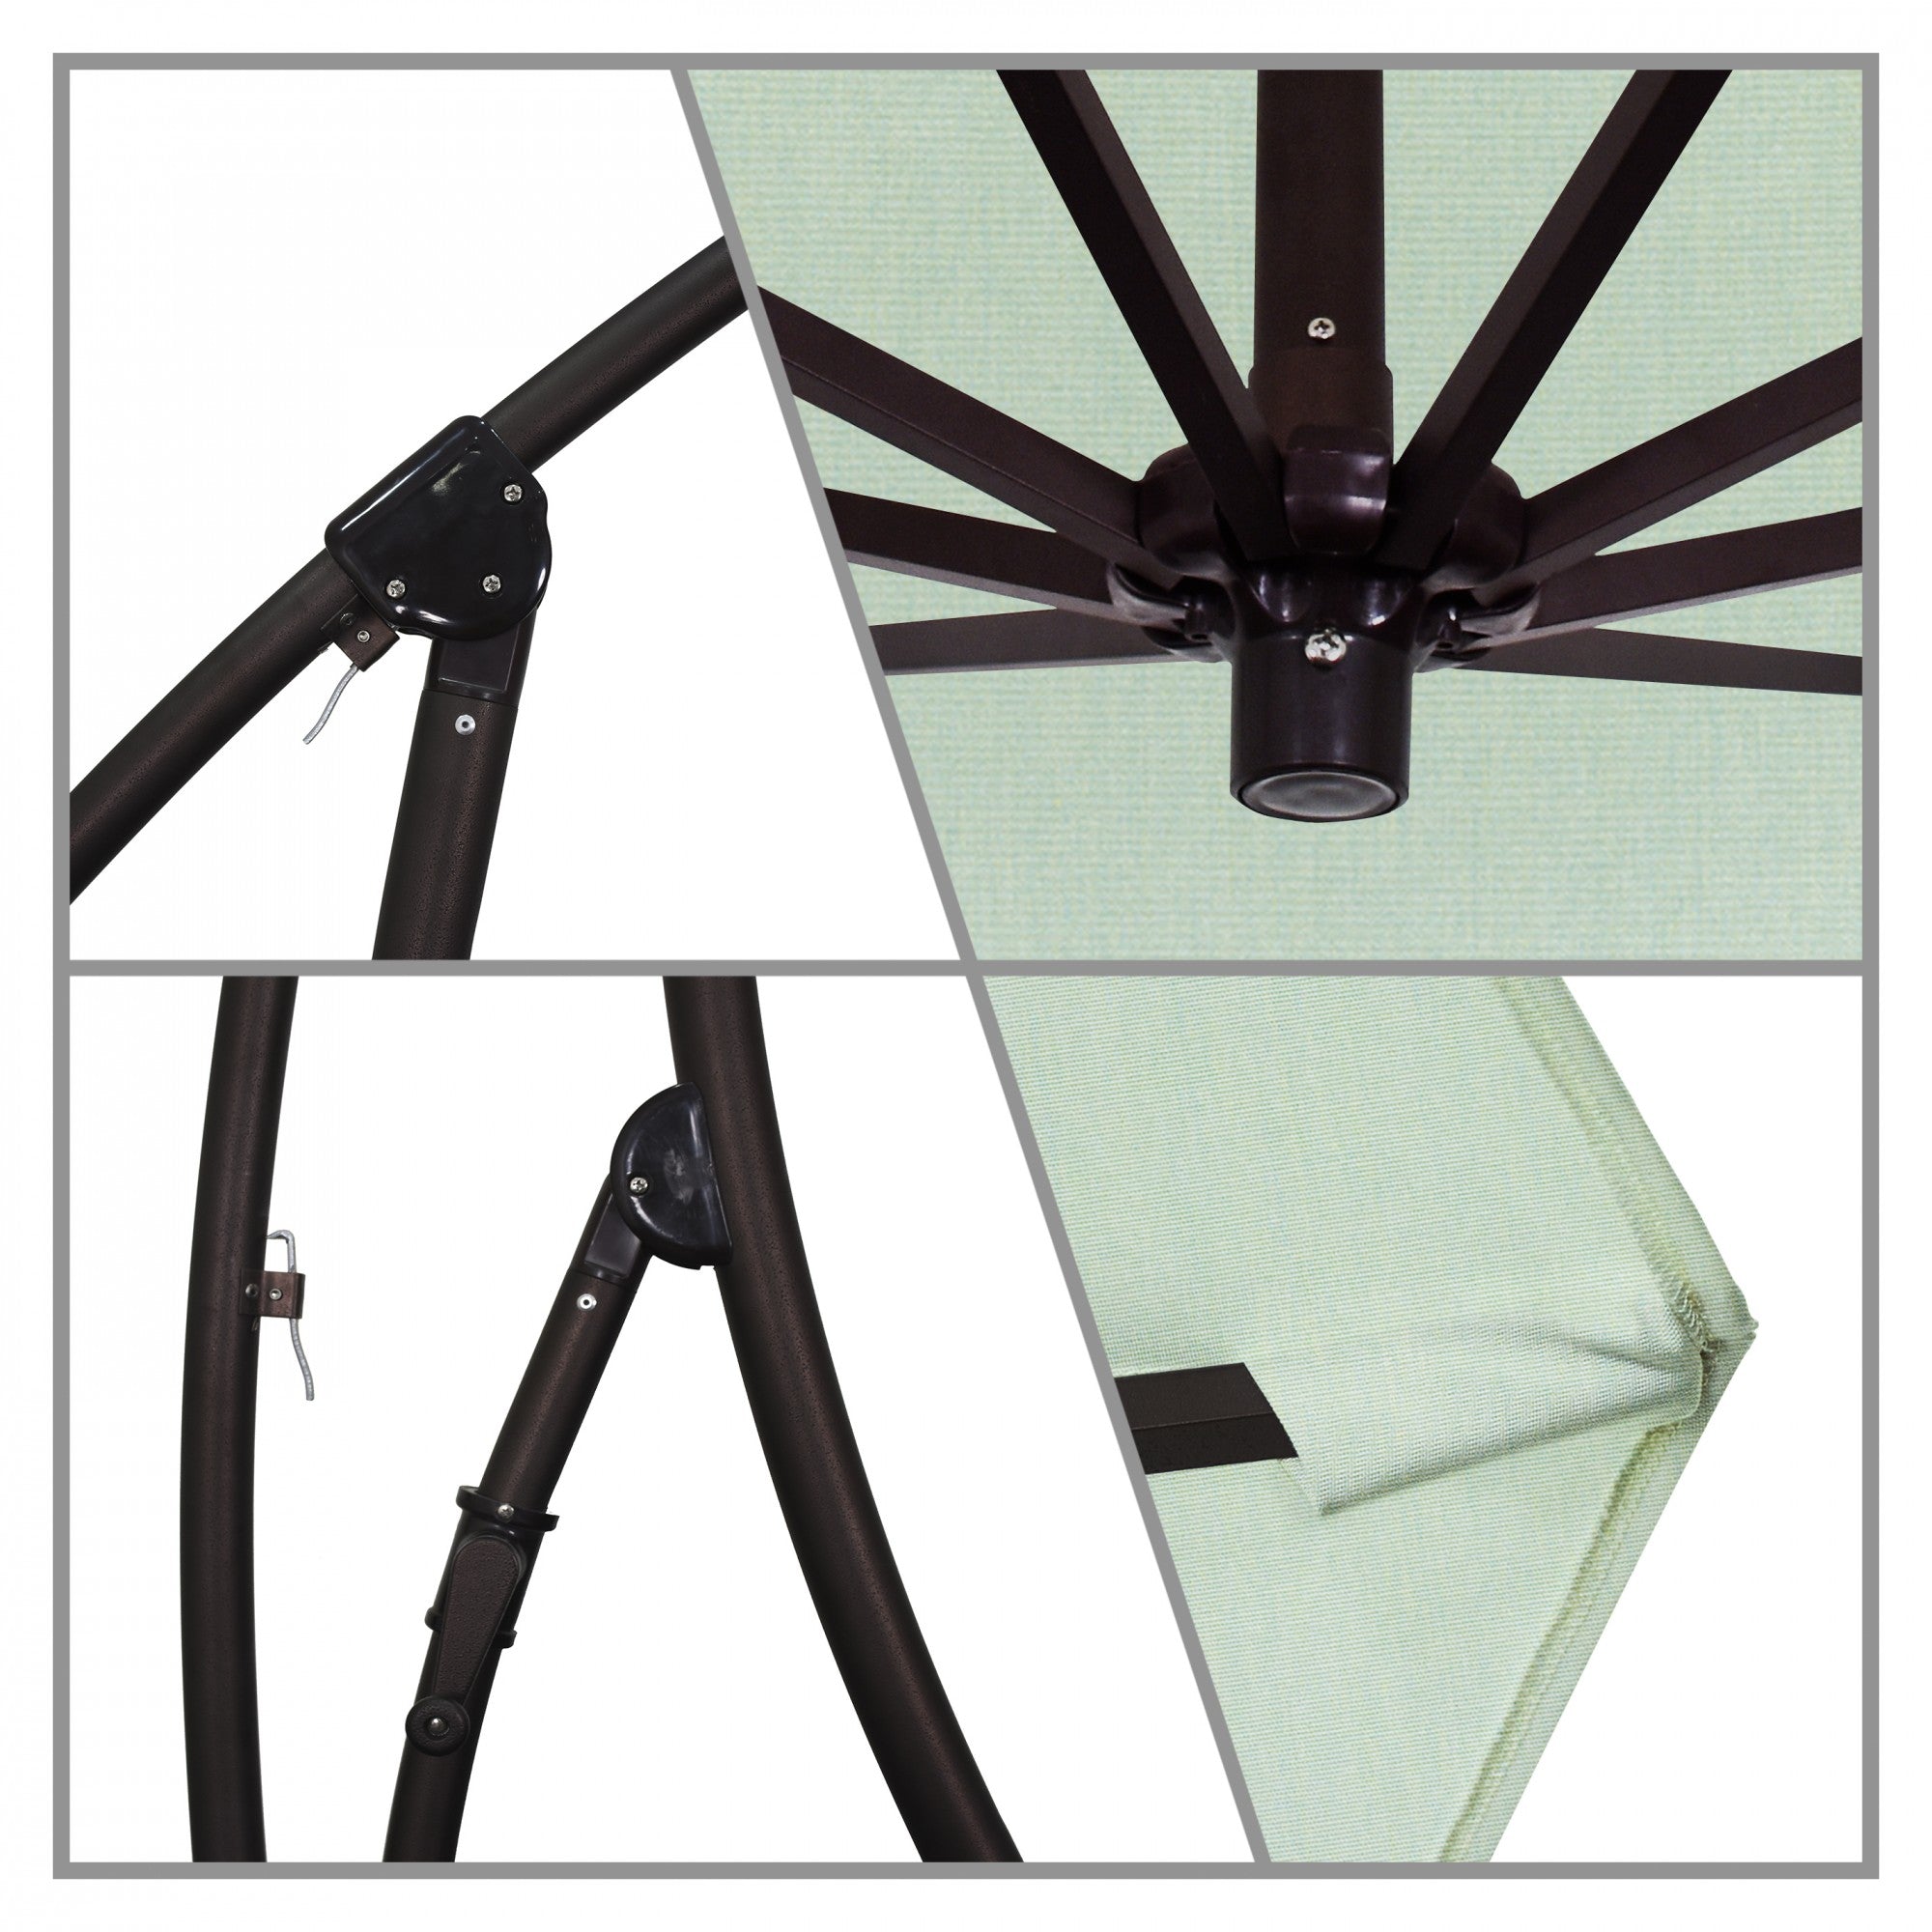 California Umbrella - 9' - Cantilever Umbrella - Aluminum Pole - Spa - Sunbrella  - BA908117-5413